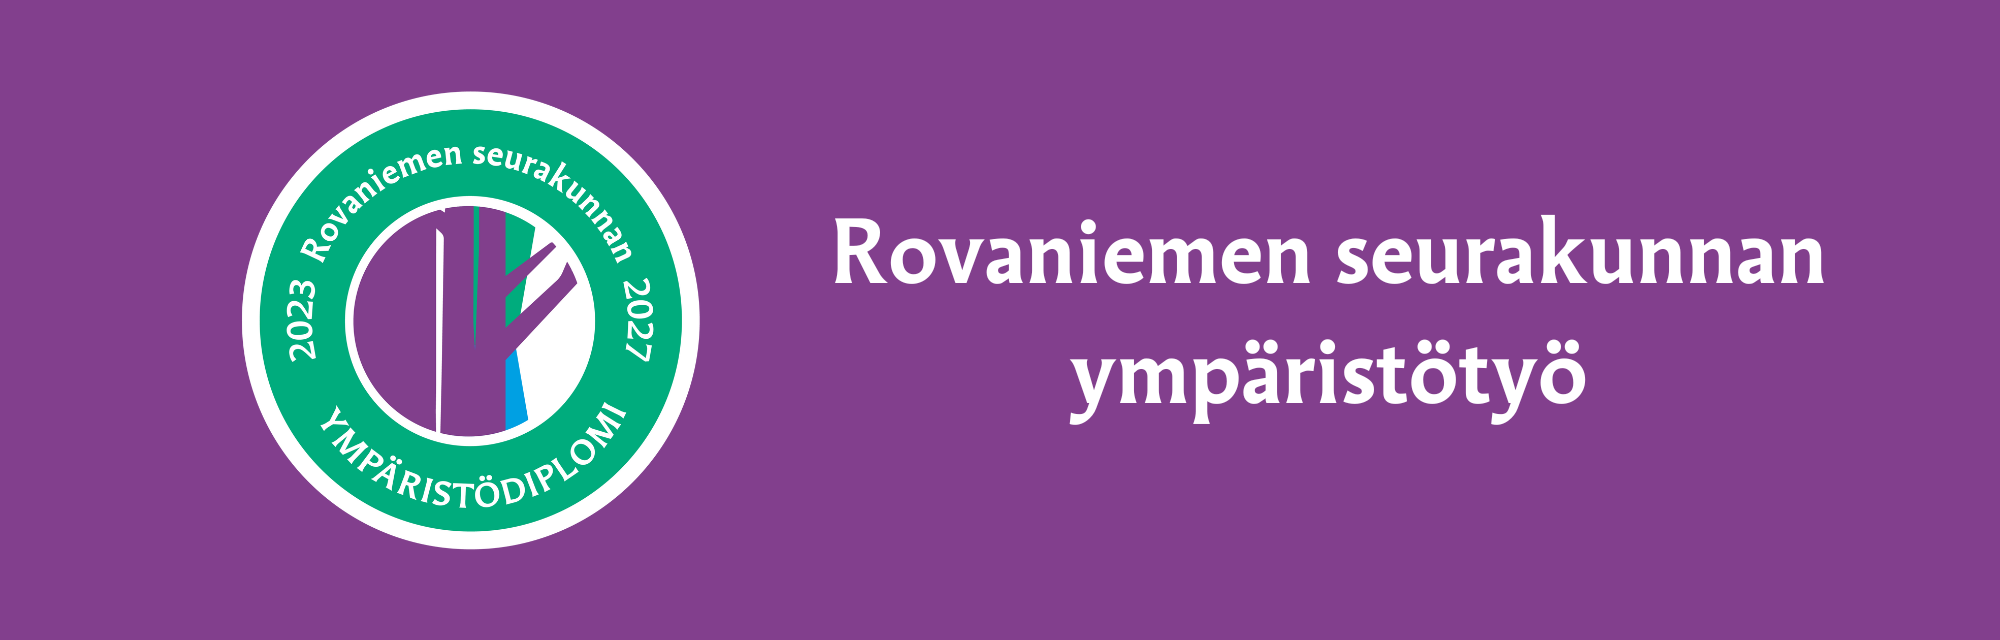 Rovaniemen seurakunnan ympäristödiplomilogo violetilla pohjalla.